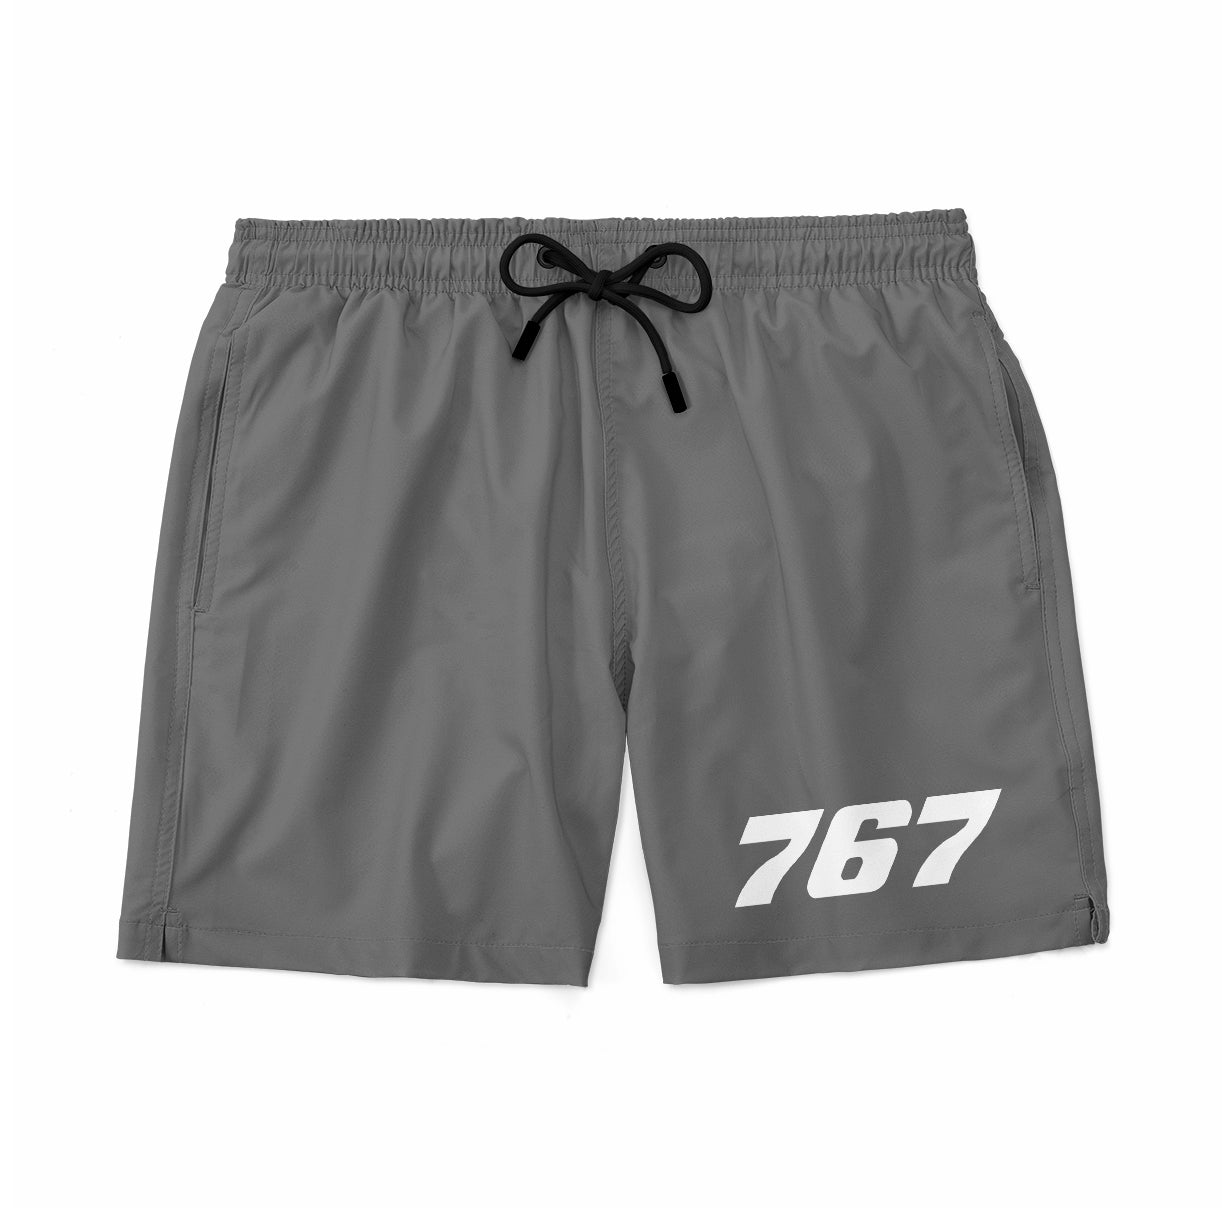 767 Flat Text Designed Swim Trunks & Shorts